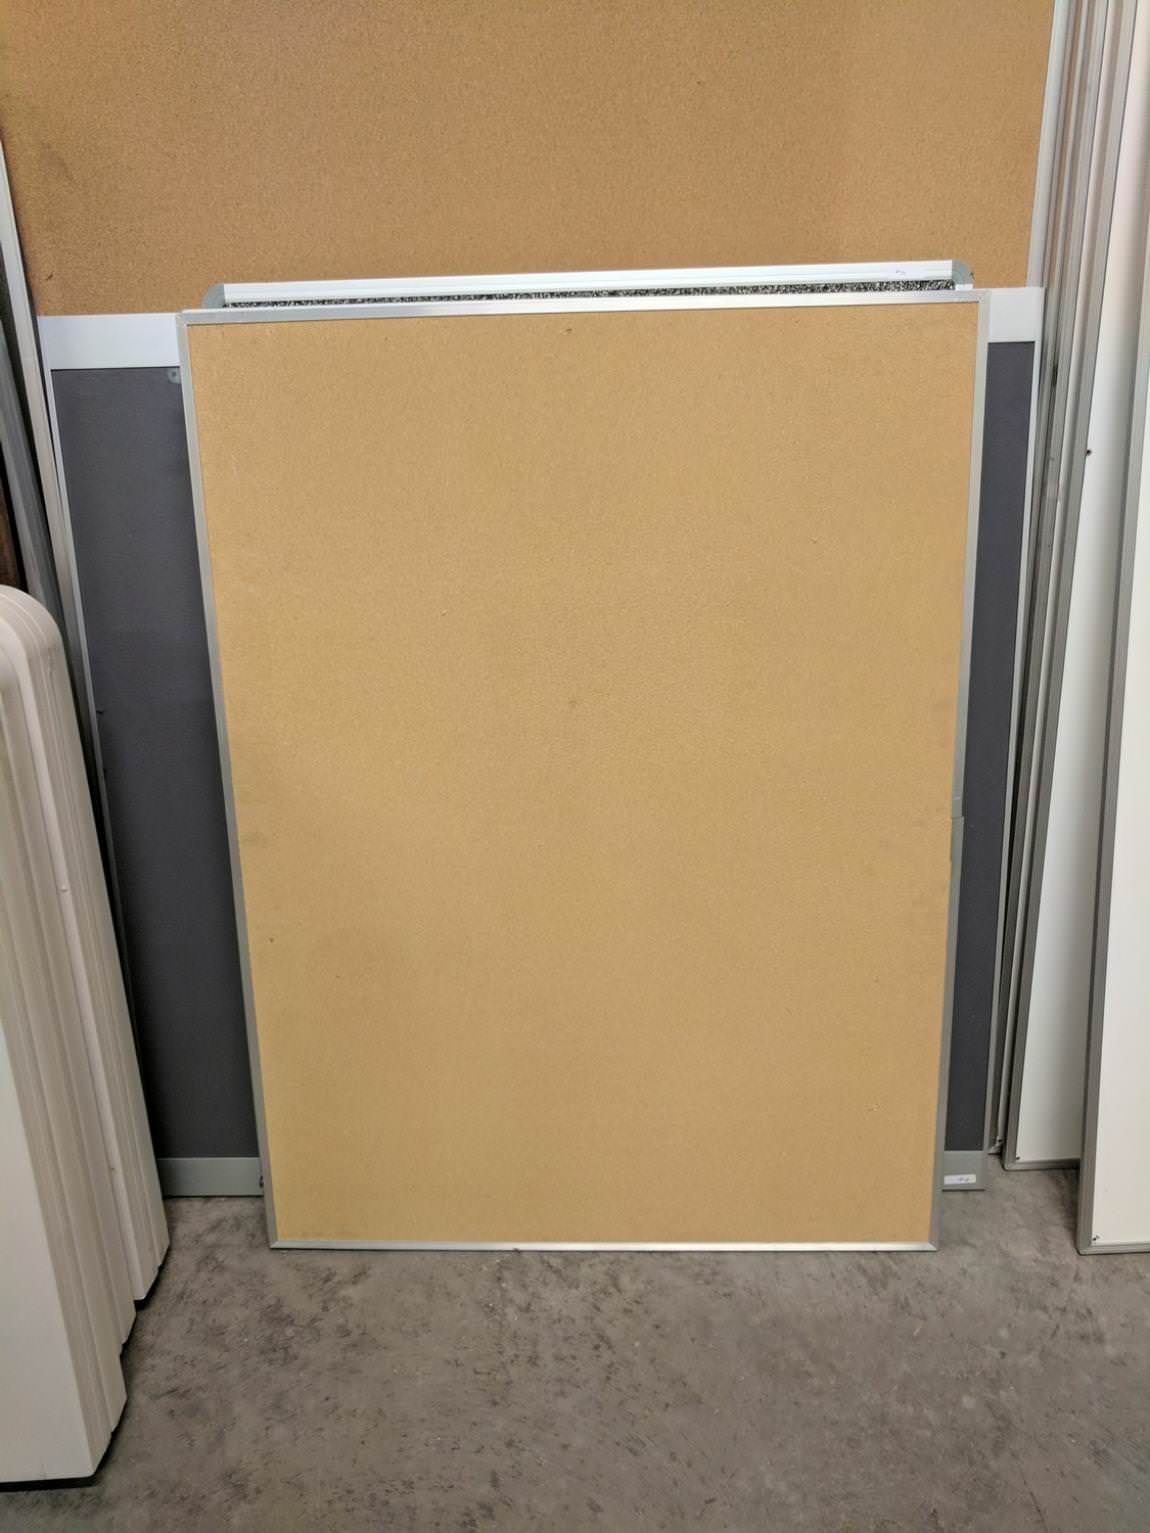 Bulletin Board With Aluminum Frame